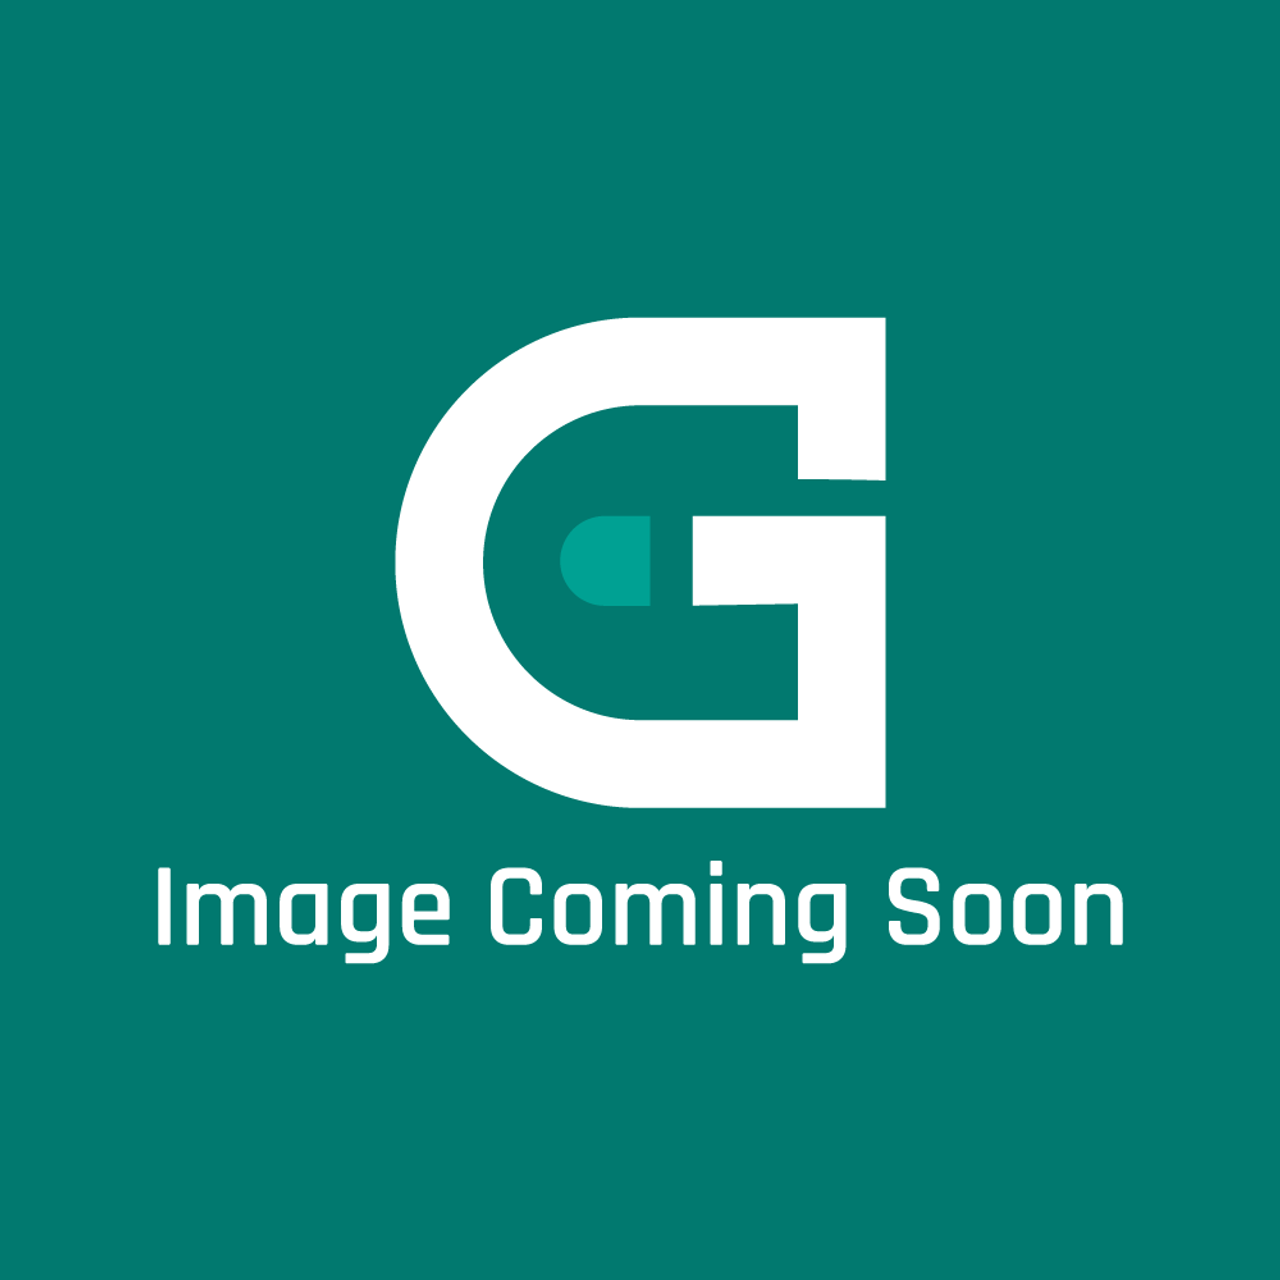 Frigidaire - Electrolux 242096817 Pan-Deli - Image Coming Soon!